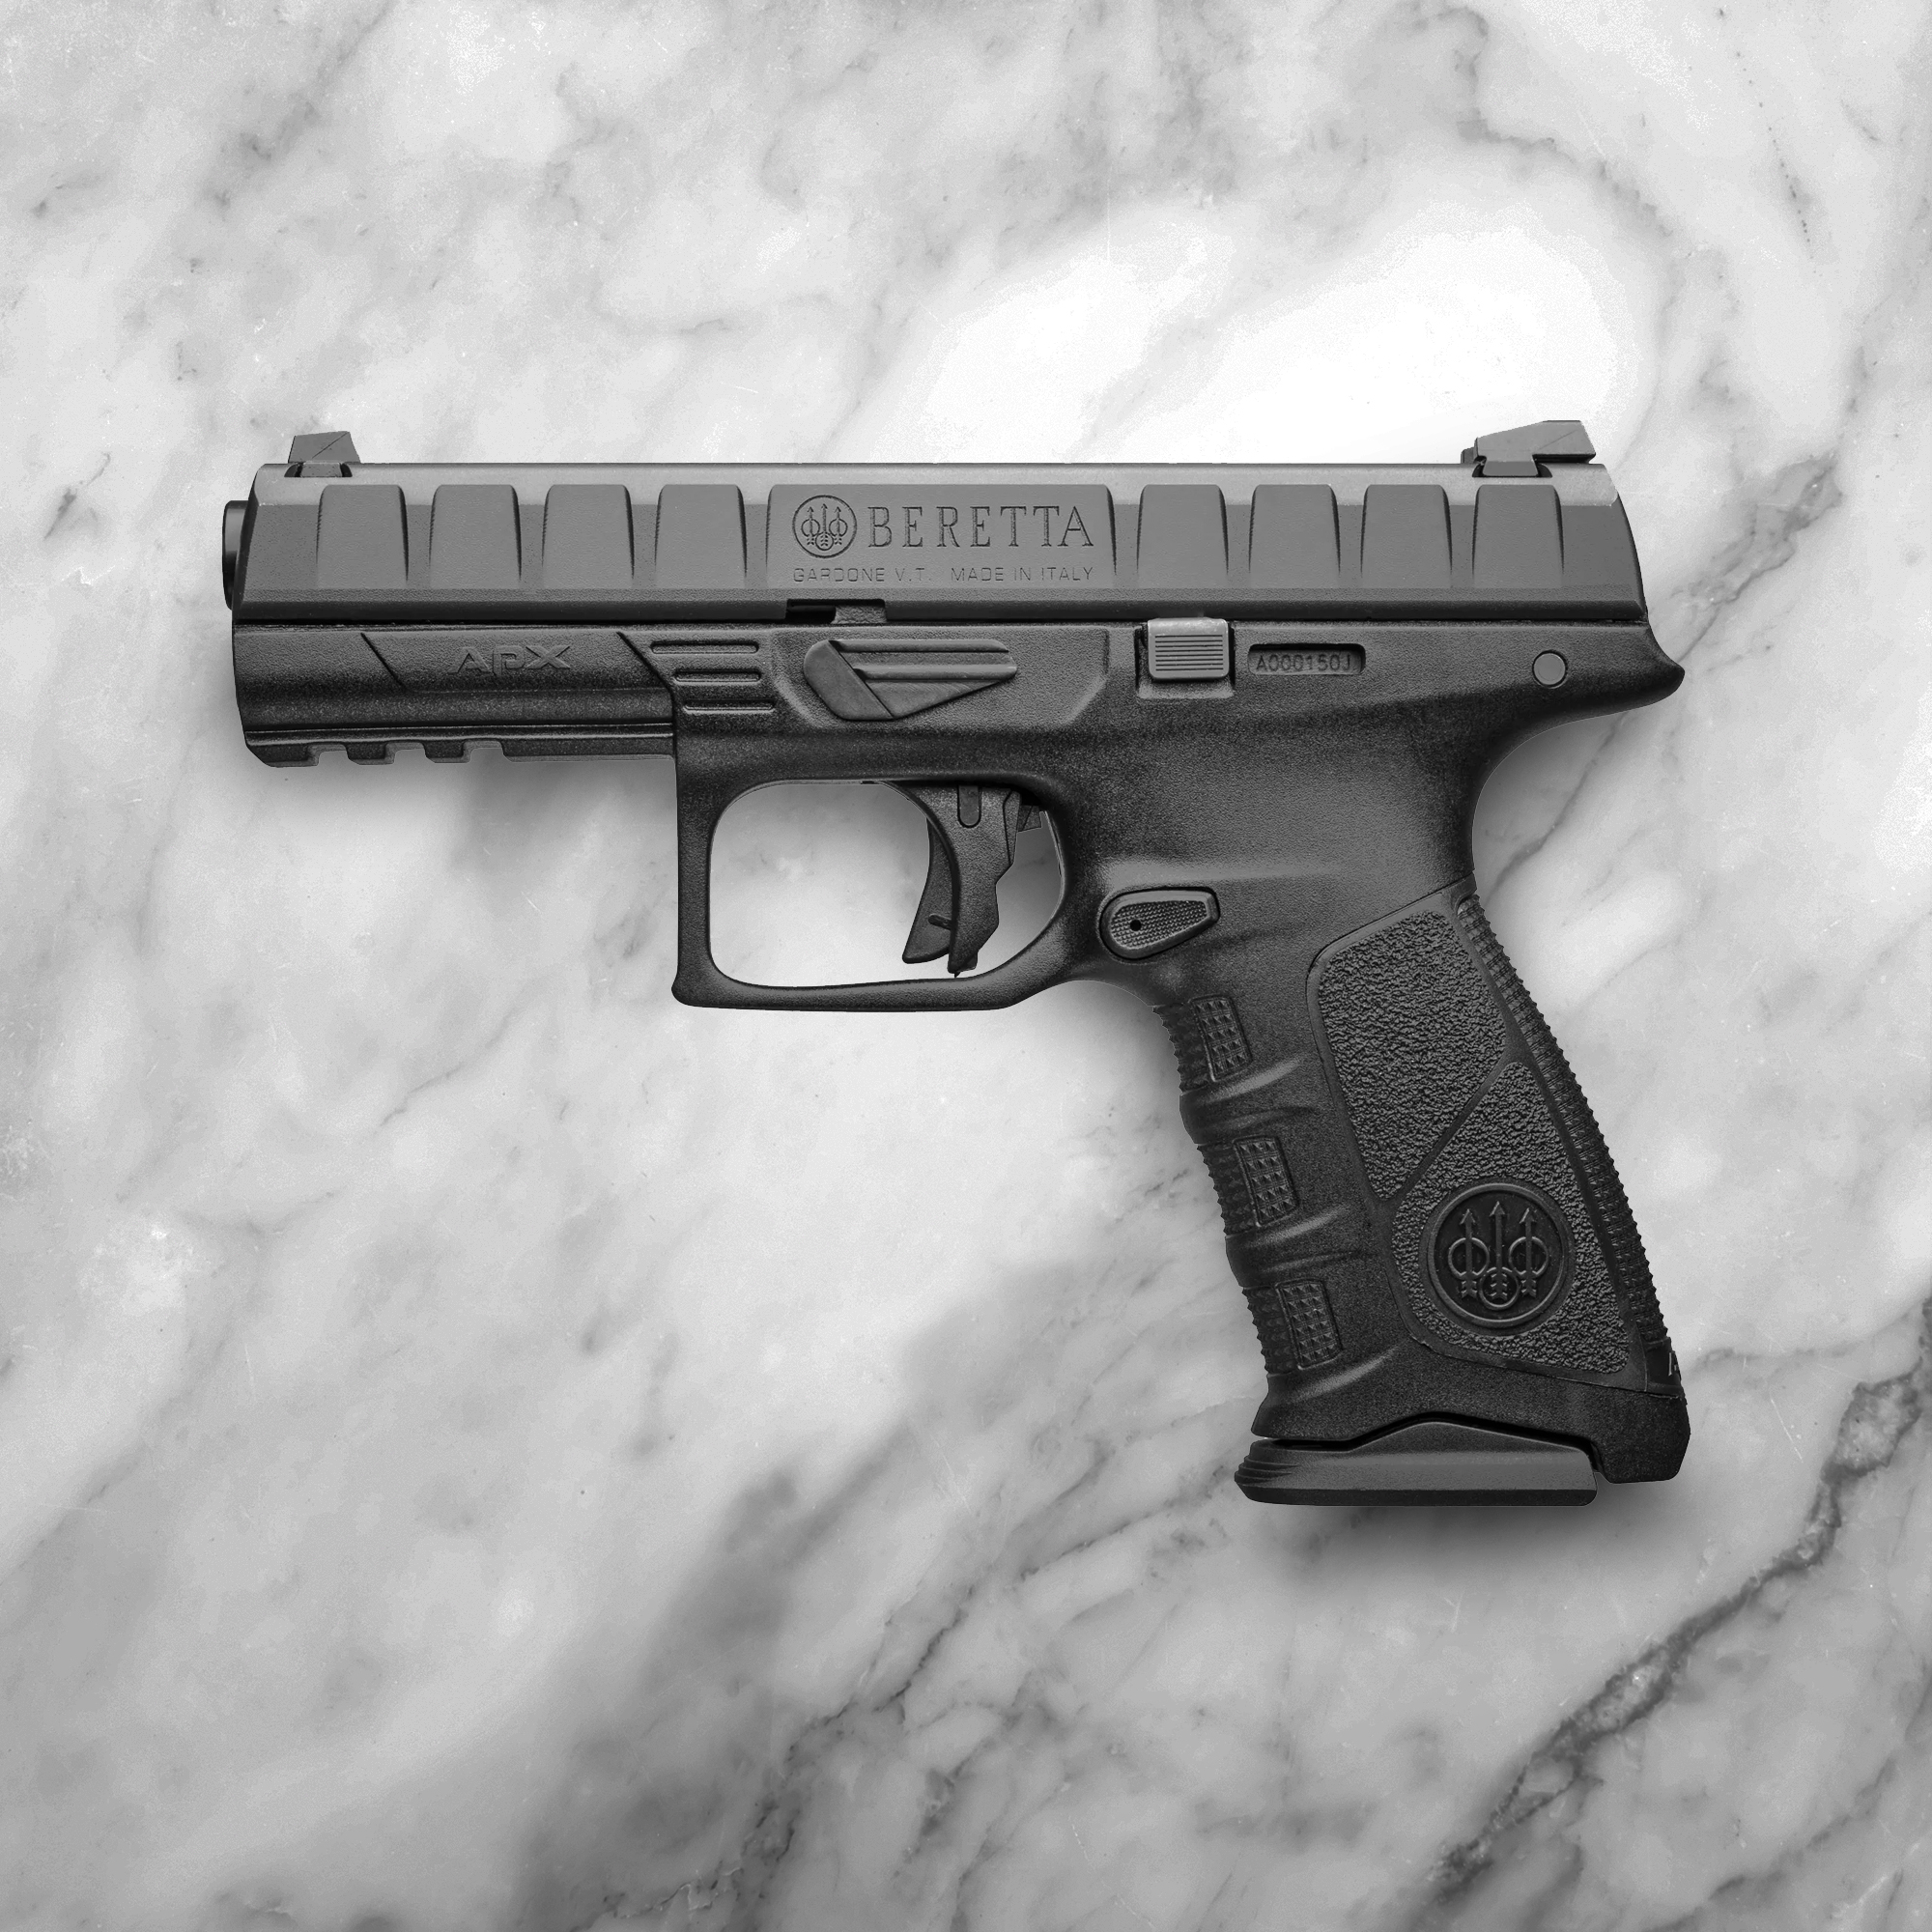 Beretta APX handgun laying on surface